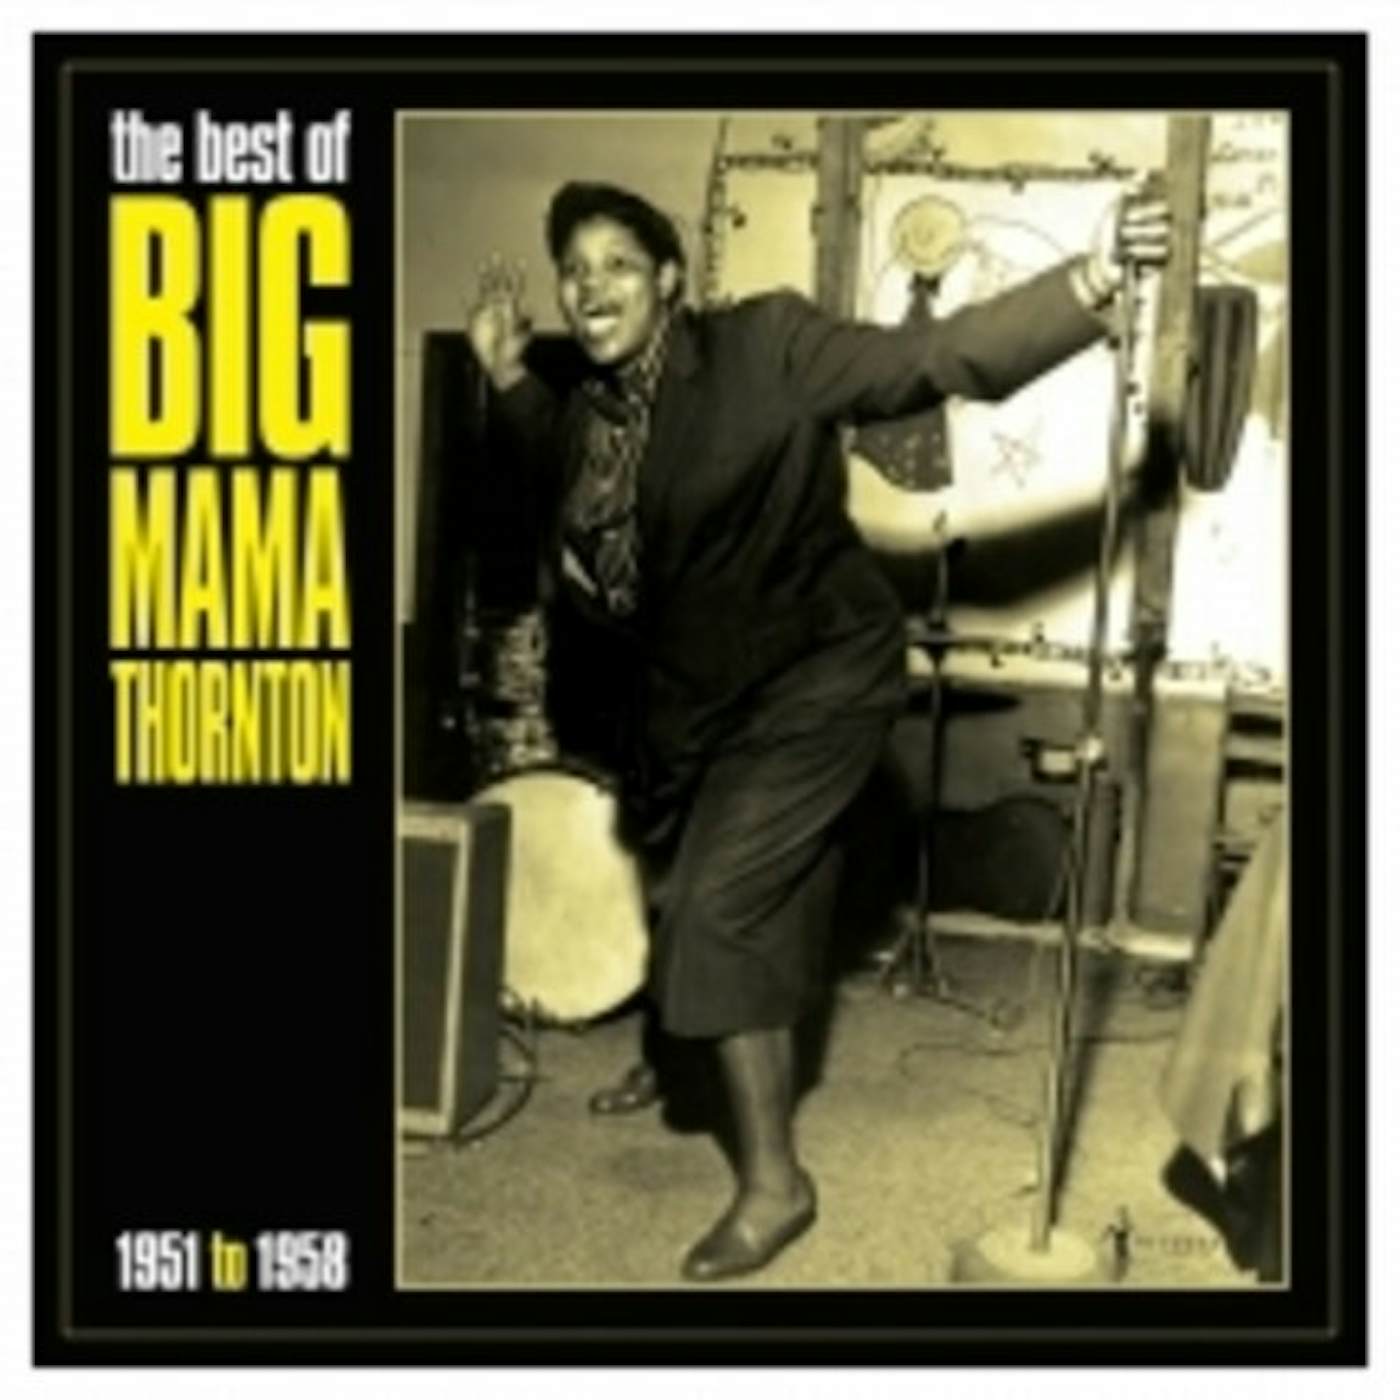 BEST OF BIG MAMA THORNTON 1951-58 Vinyl Record